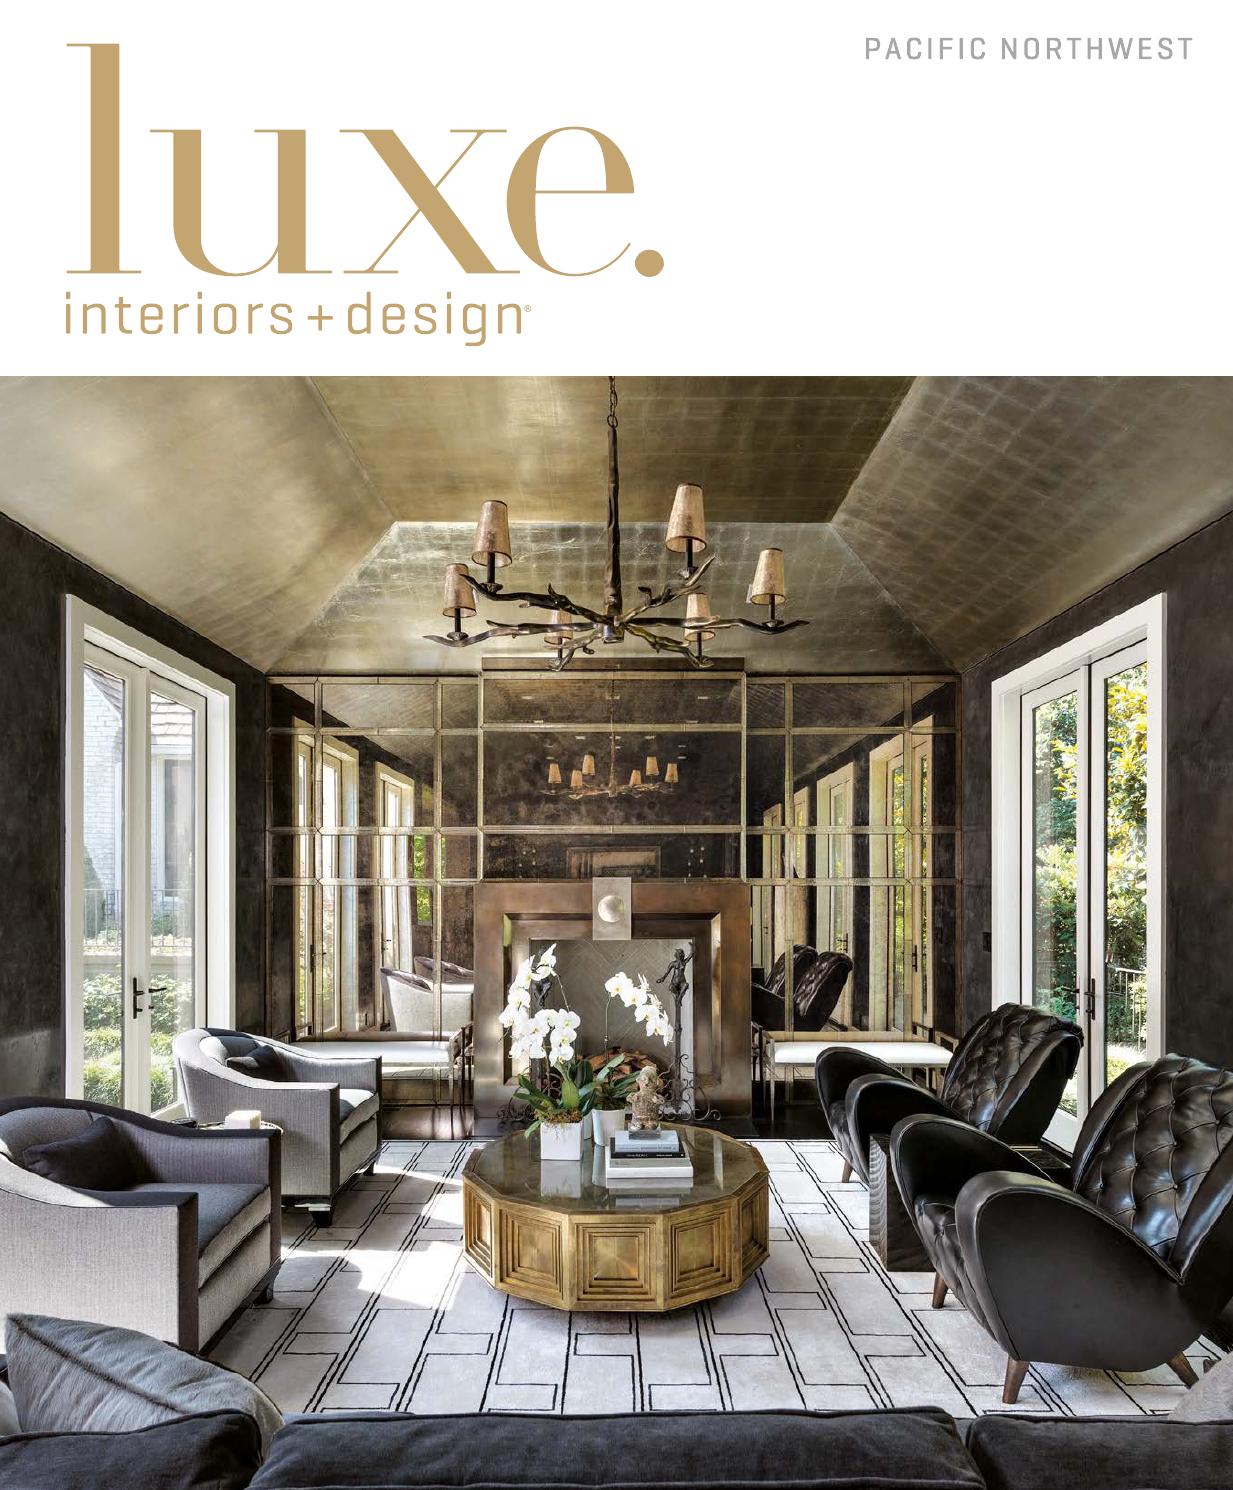 Davinci Fireplace Beautiful Luxe Magazine September 2015 Pacific northwest by Sandow